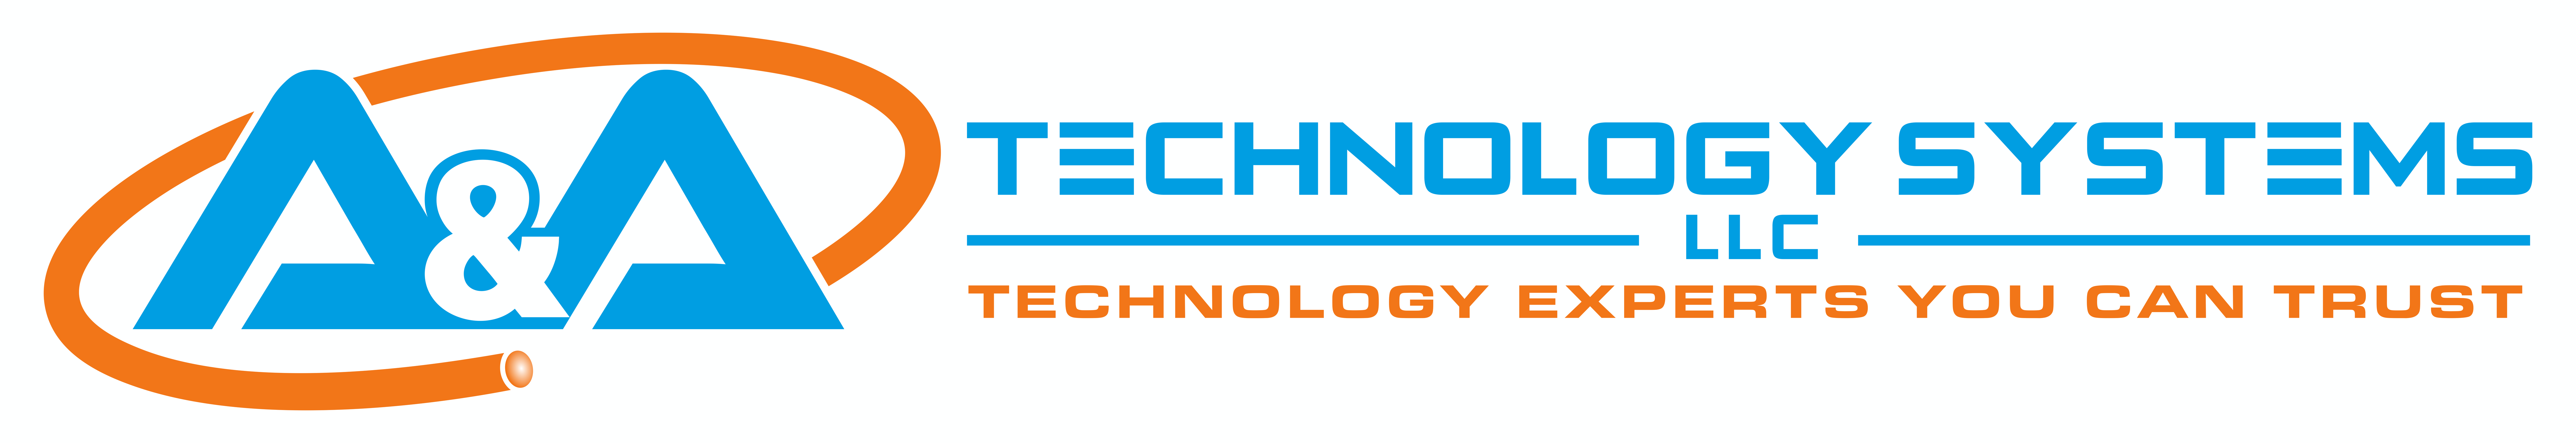 A&A Technology Systems, LLC 